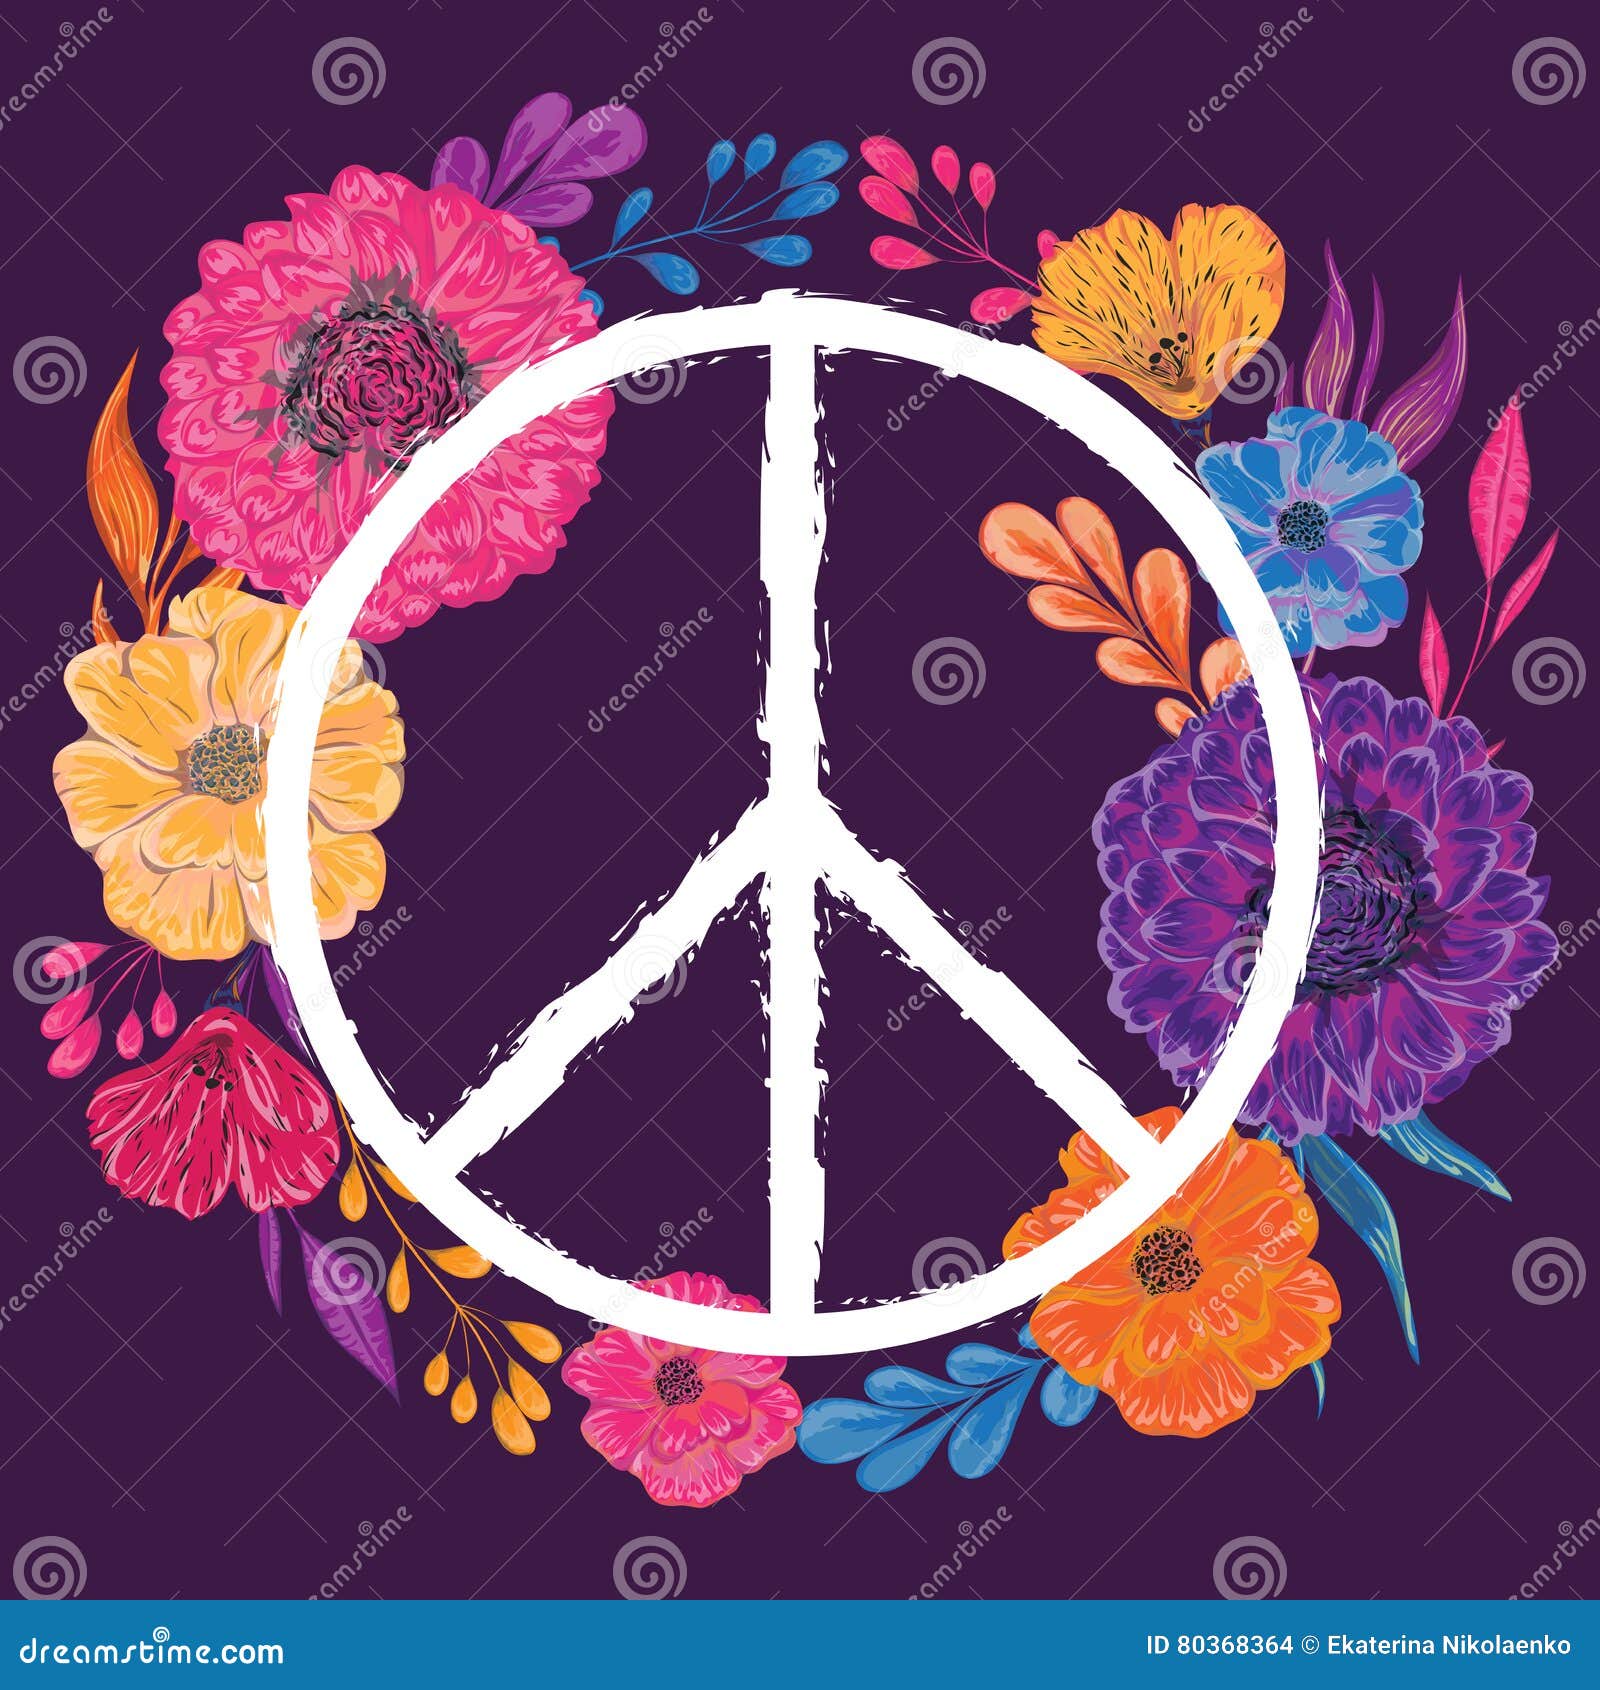 hippie peace hand